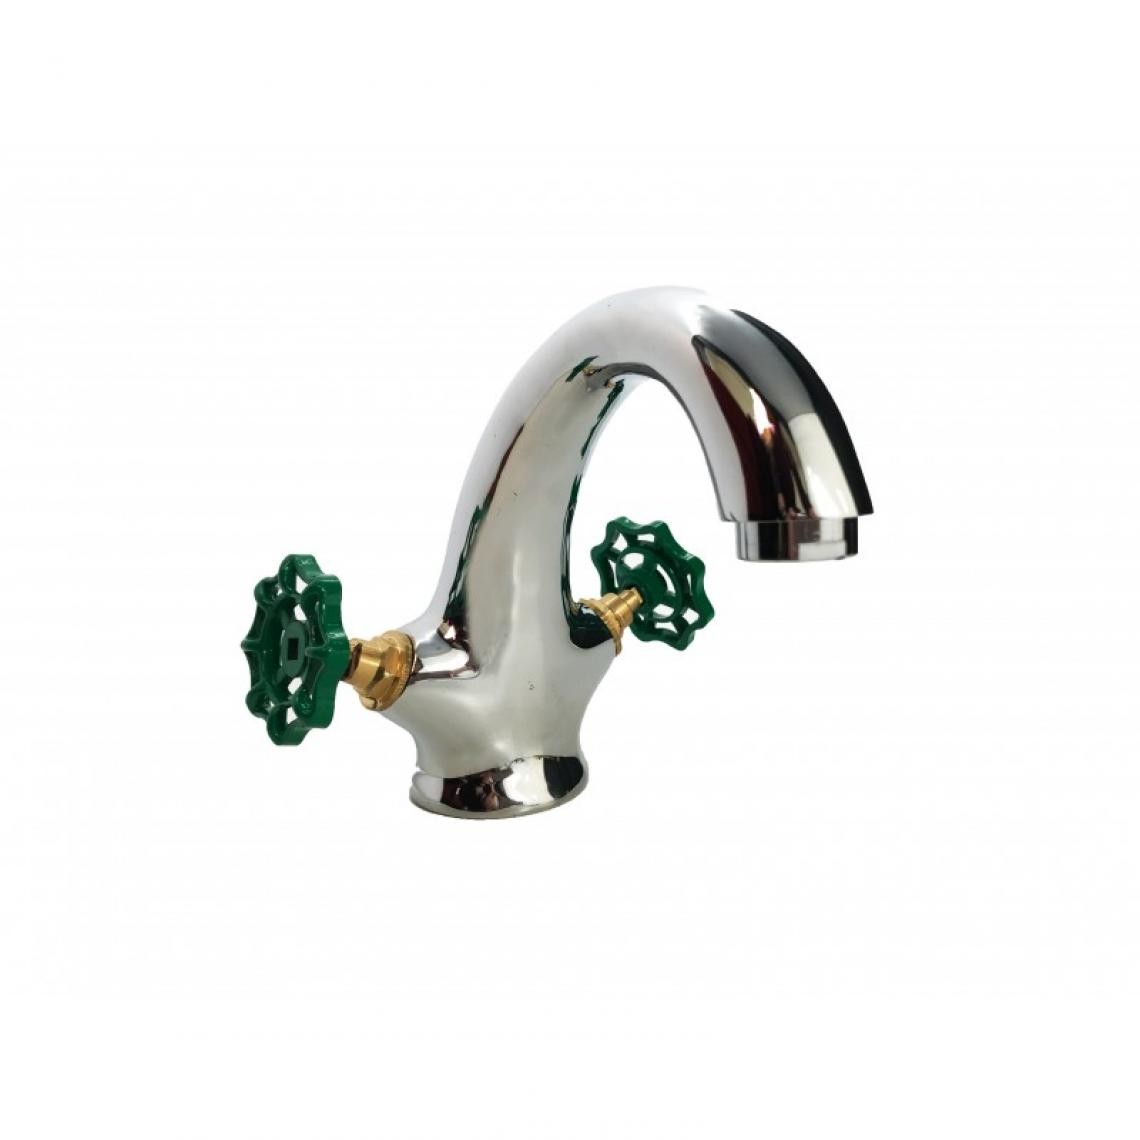 Bagnoclic - Robinet de lavabo vert industriel, style vintage industriel - Robinet de lavabo